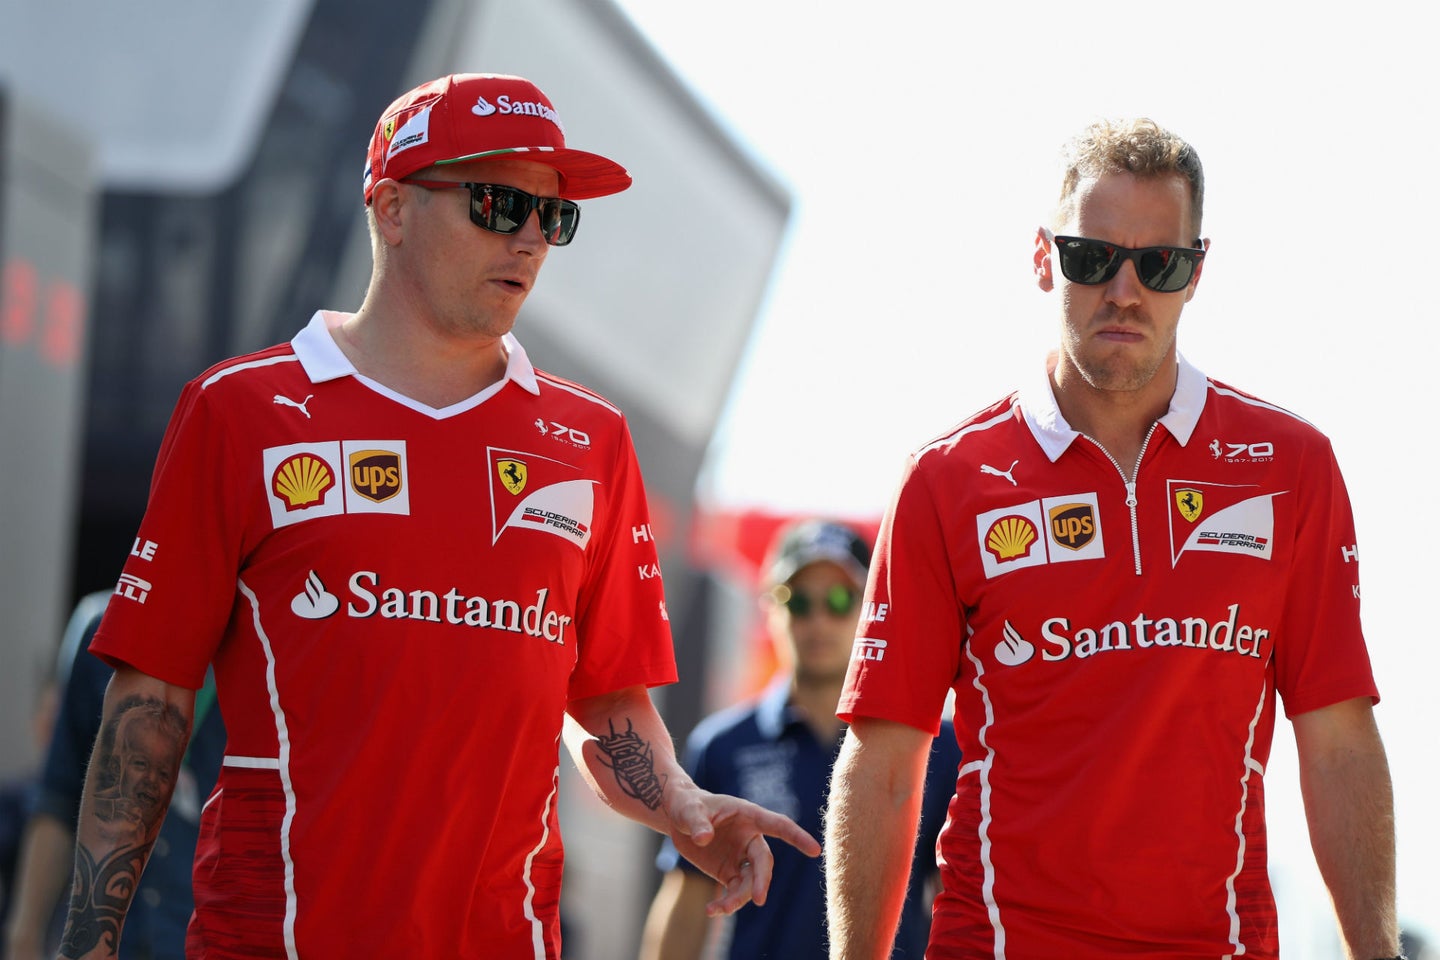 Ferrari Expects Both Vettel and Raikkonen to Stay on Board in 2018